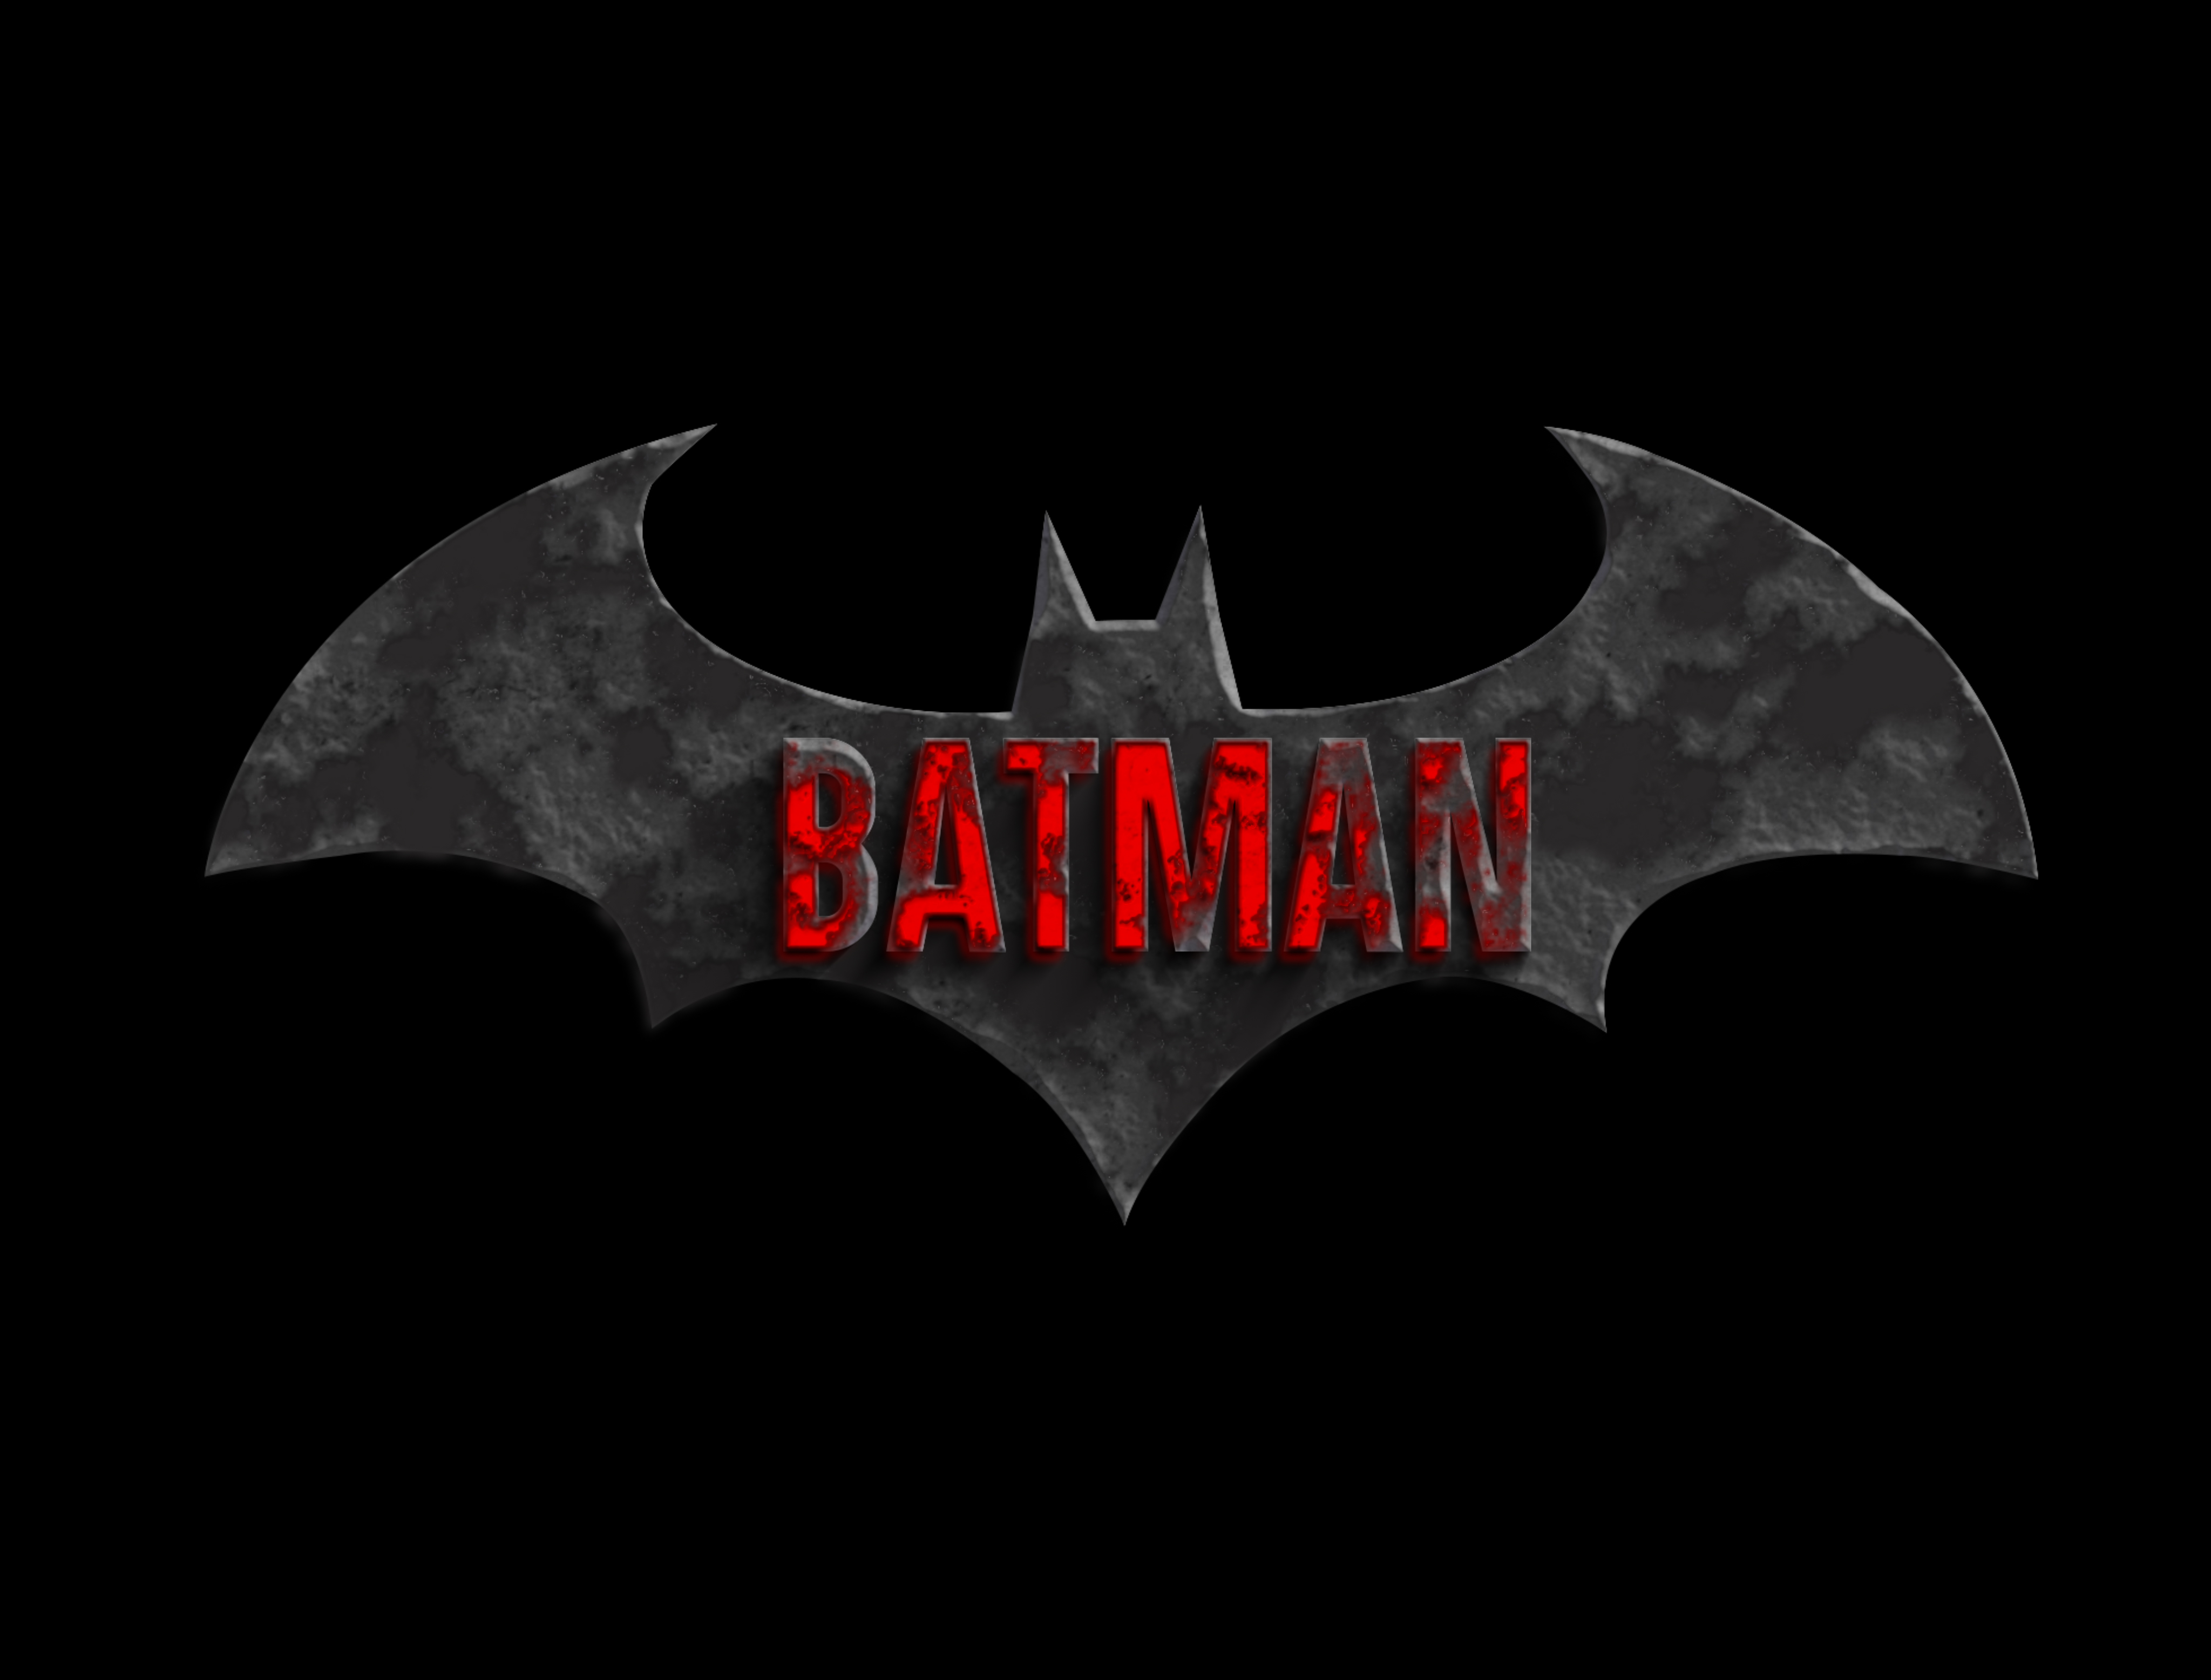 Batman logo 2020 by knightkr on DeviantArt